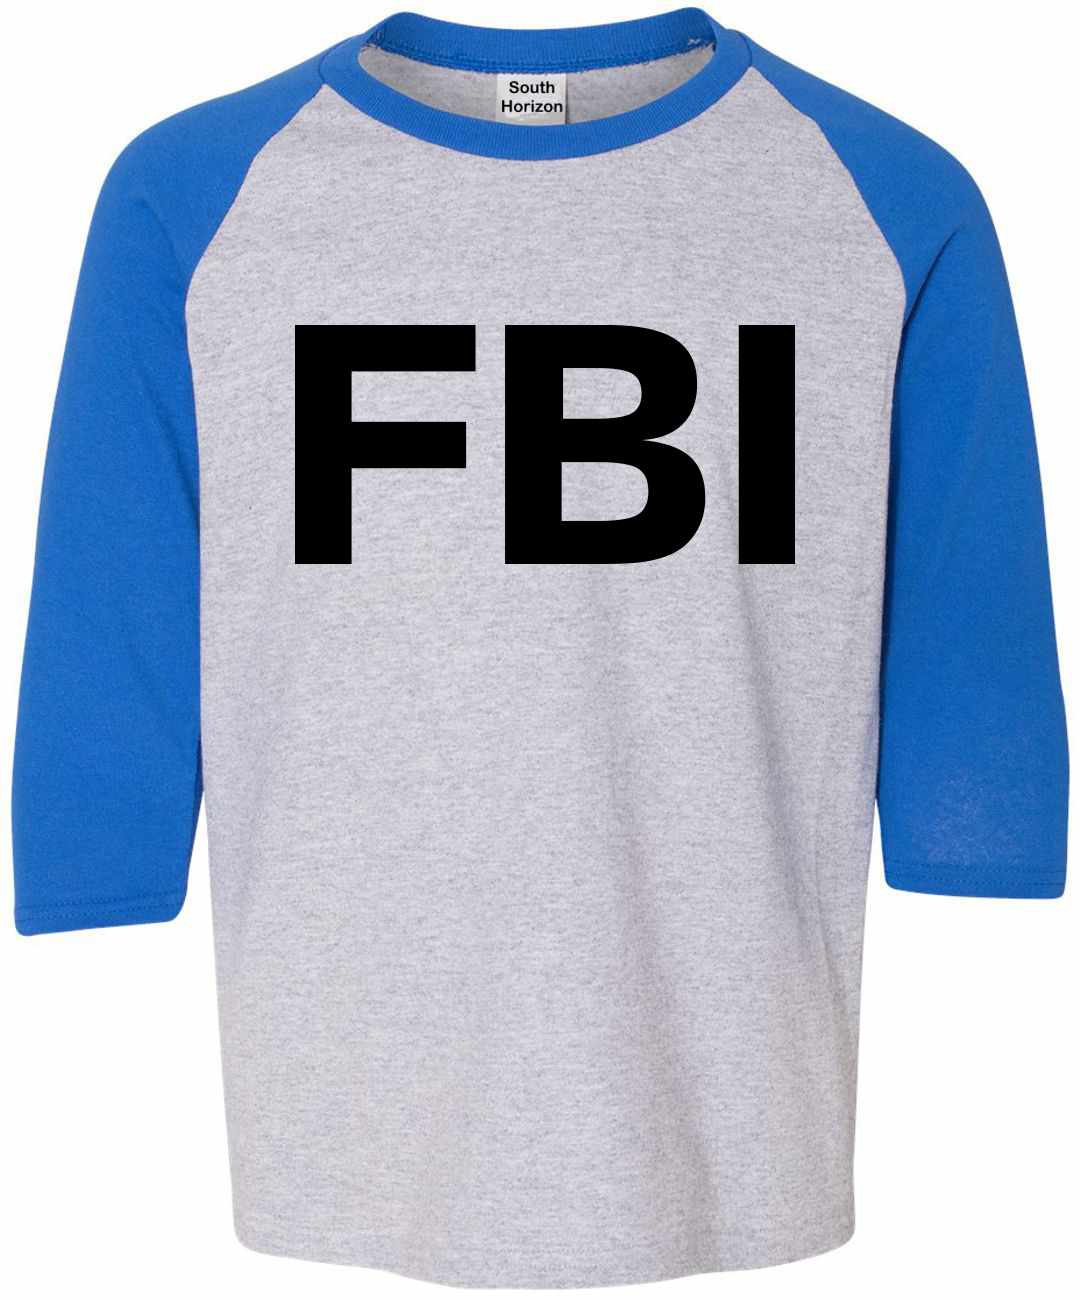 FBI on Youth Baseball Shirt (#402-212)